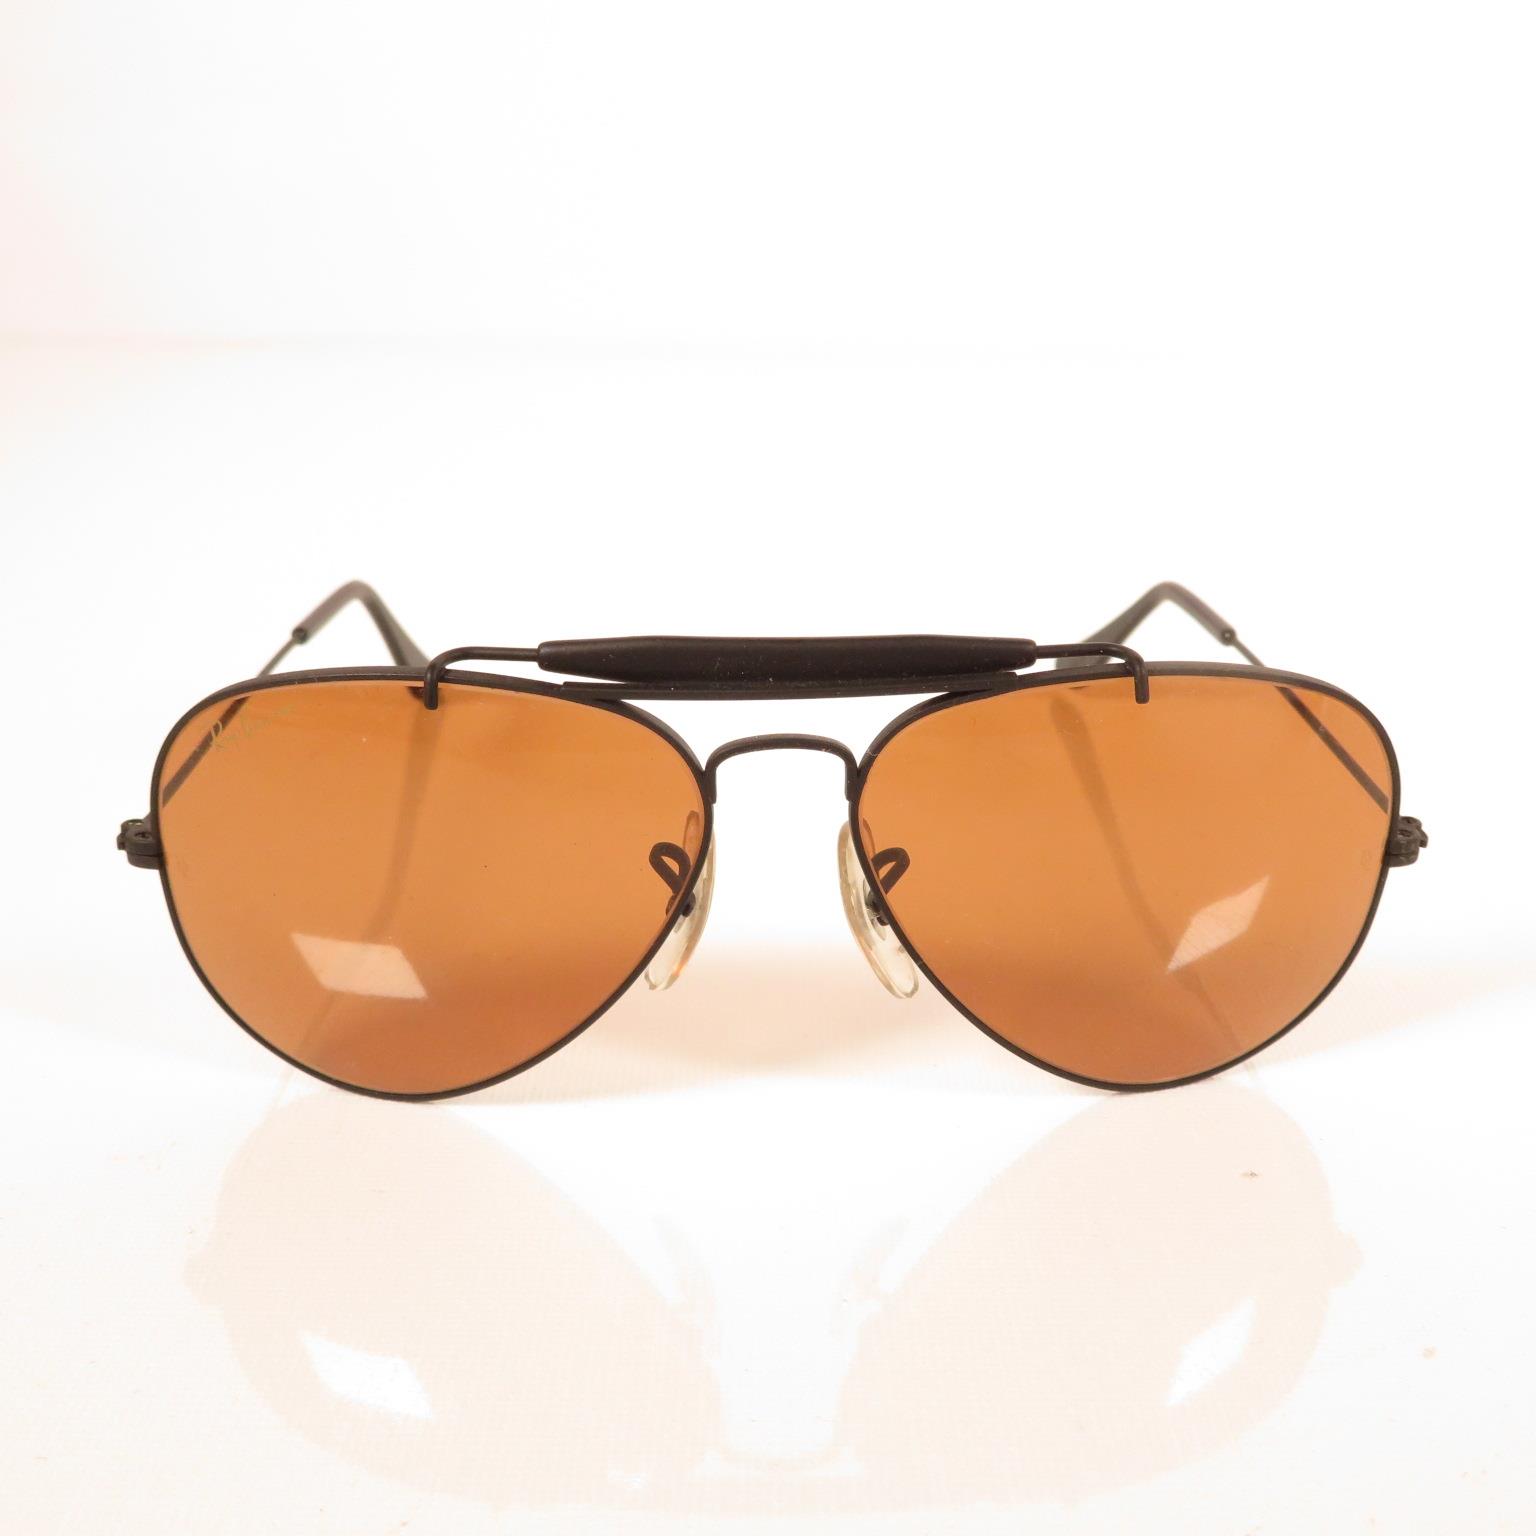 5x sets Ray Ban sunglasses - - Image 12 of 24